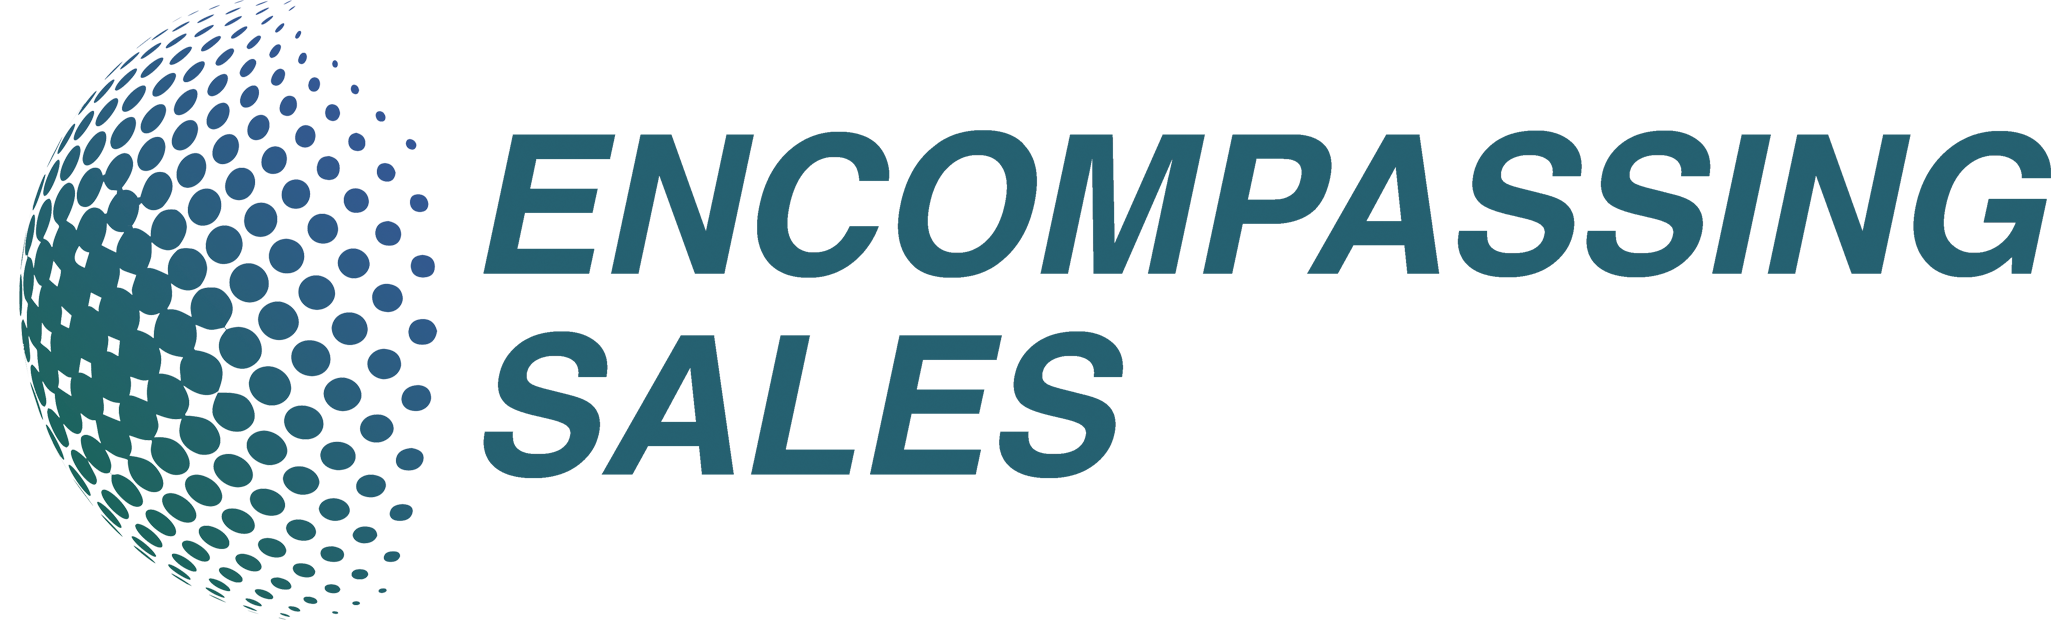 Encompassing Sales